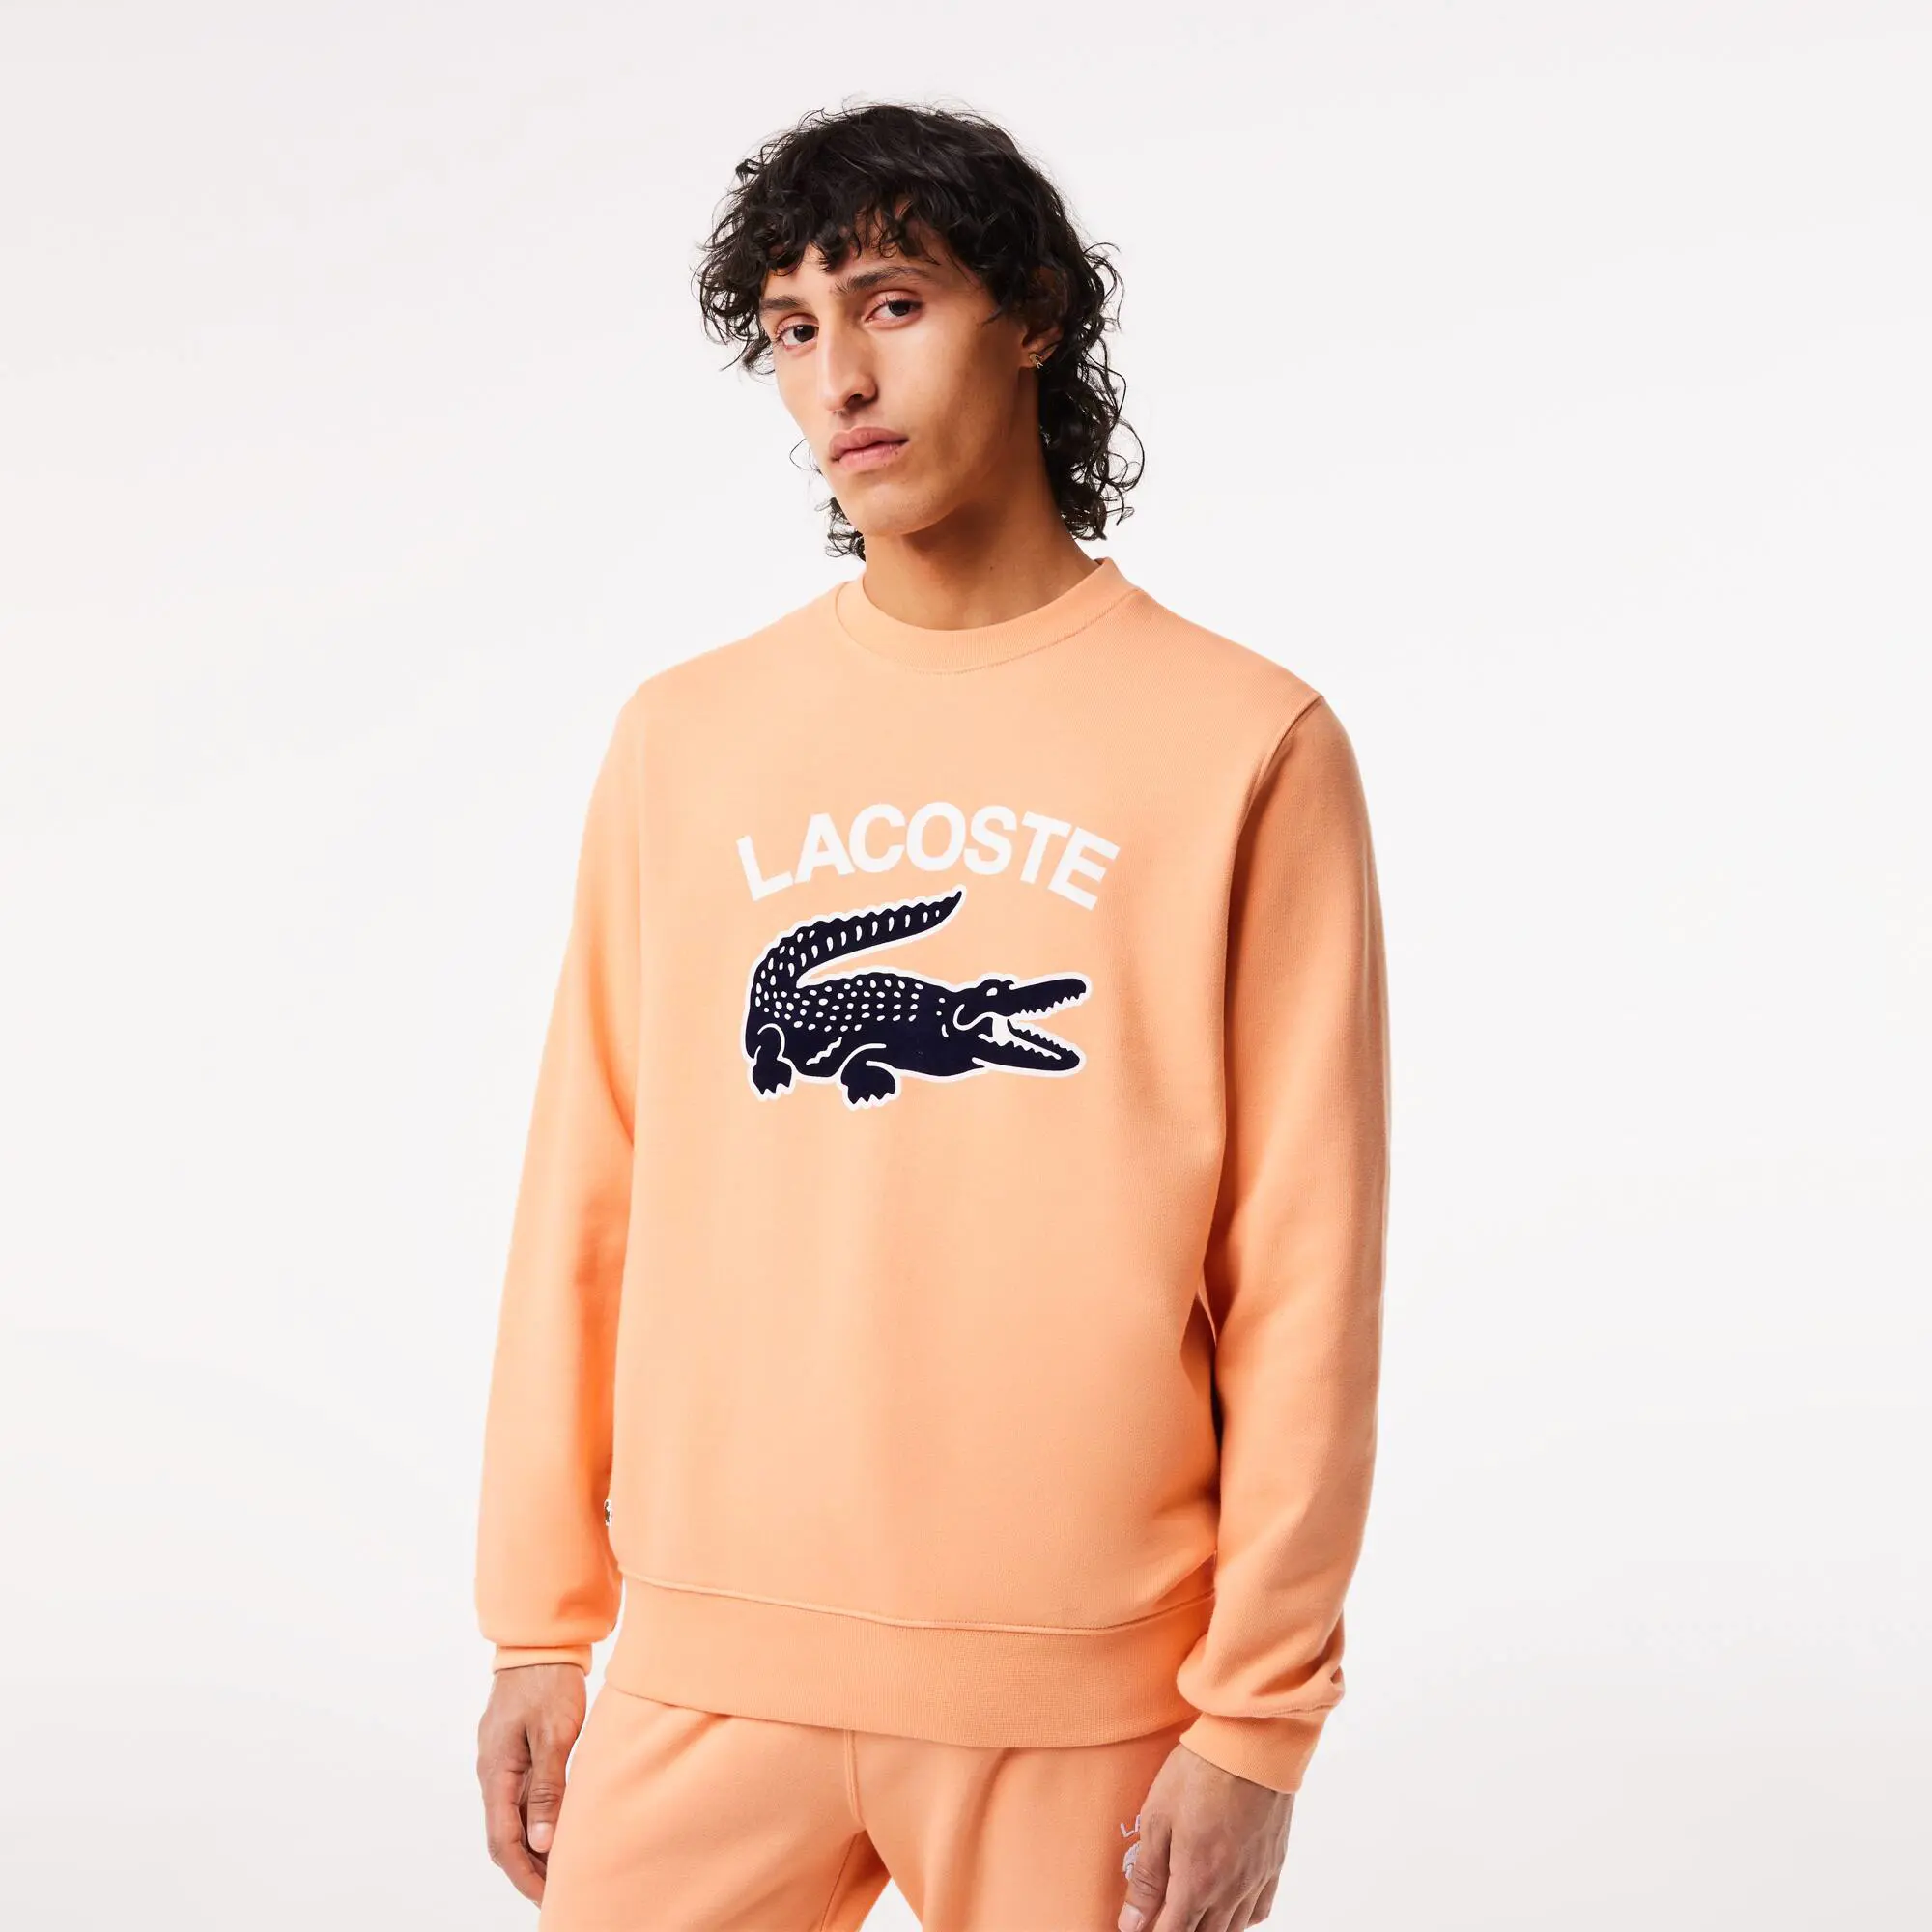 Lacoste Men's Lacoste Crocodile Print Crew Neck Sweatshirt. 1